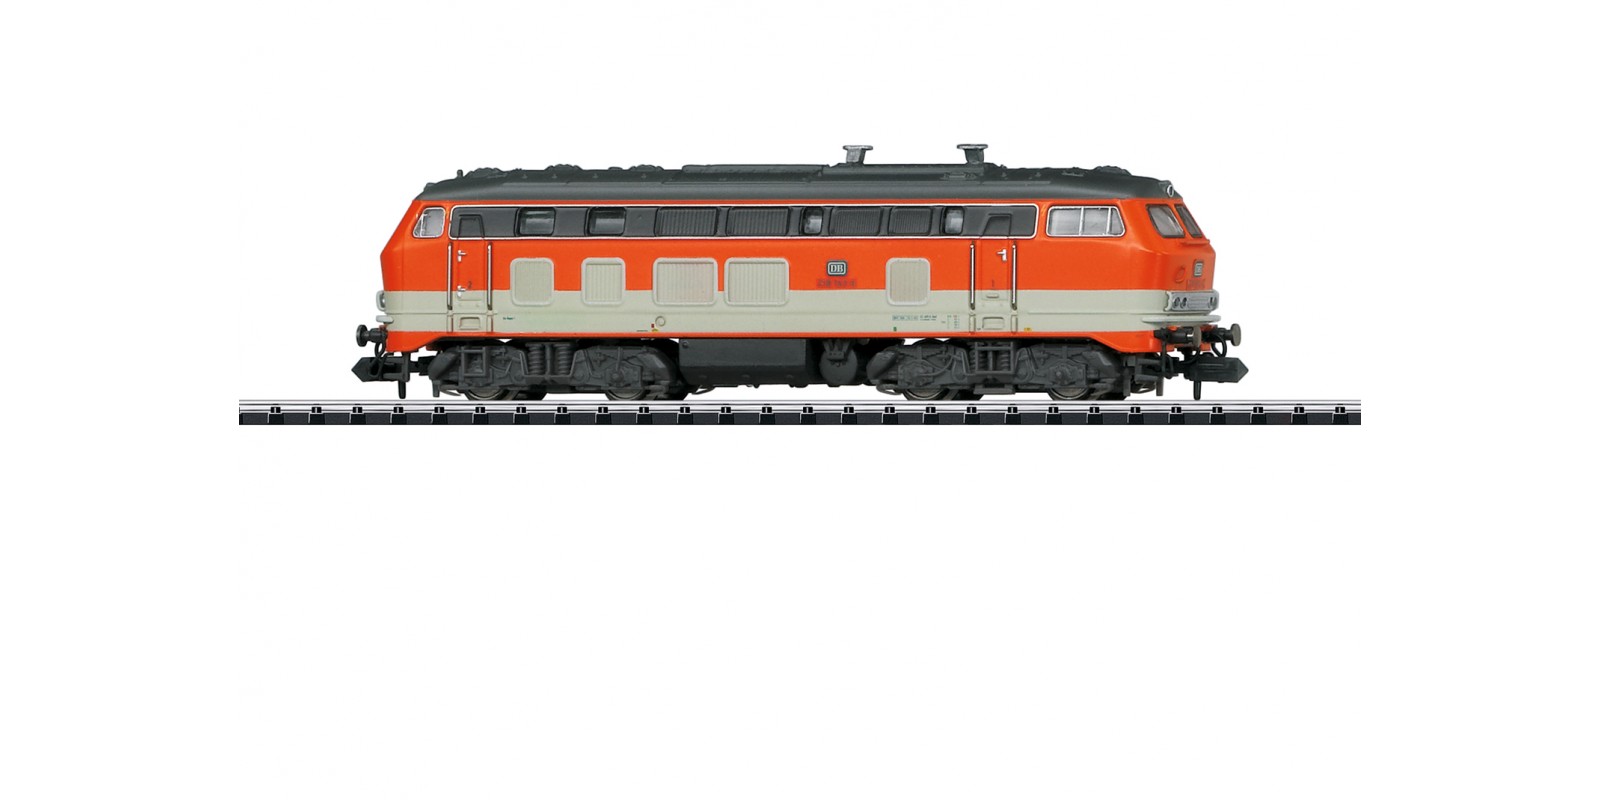 T16280 Class 218 Diesel Locomotive